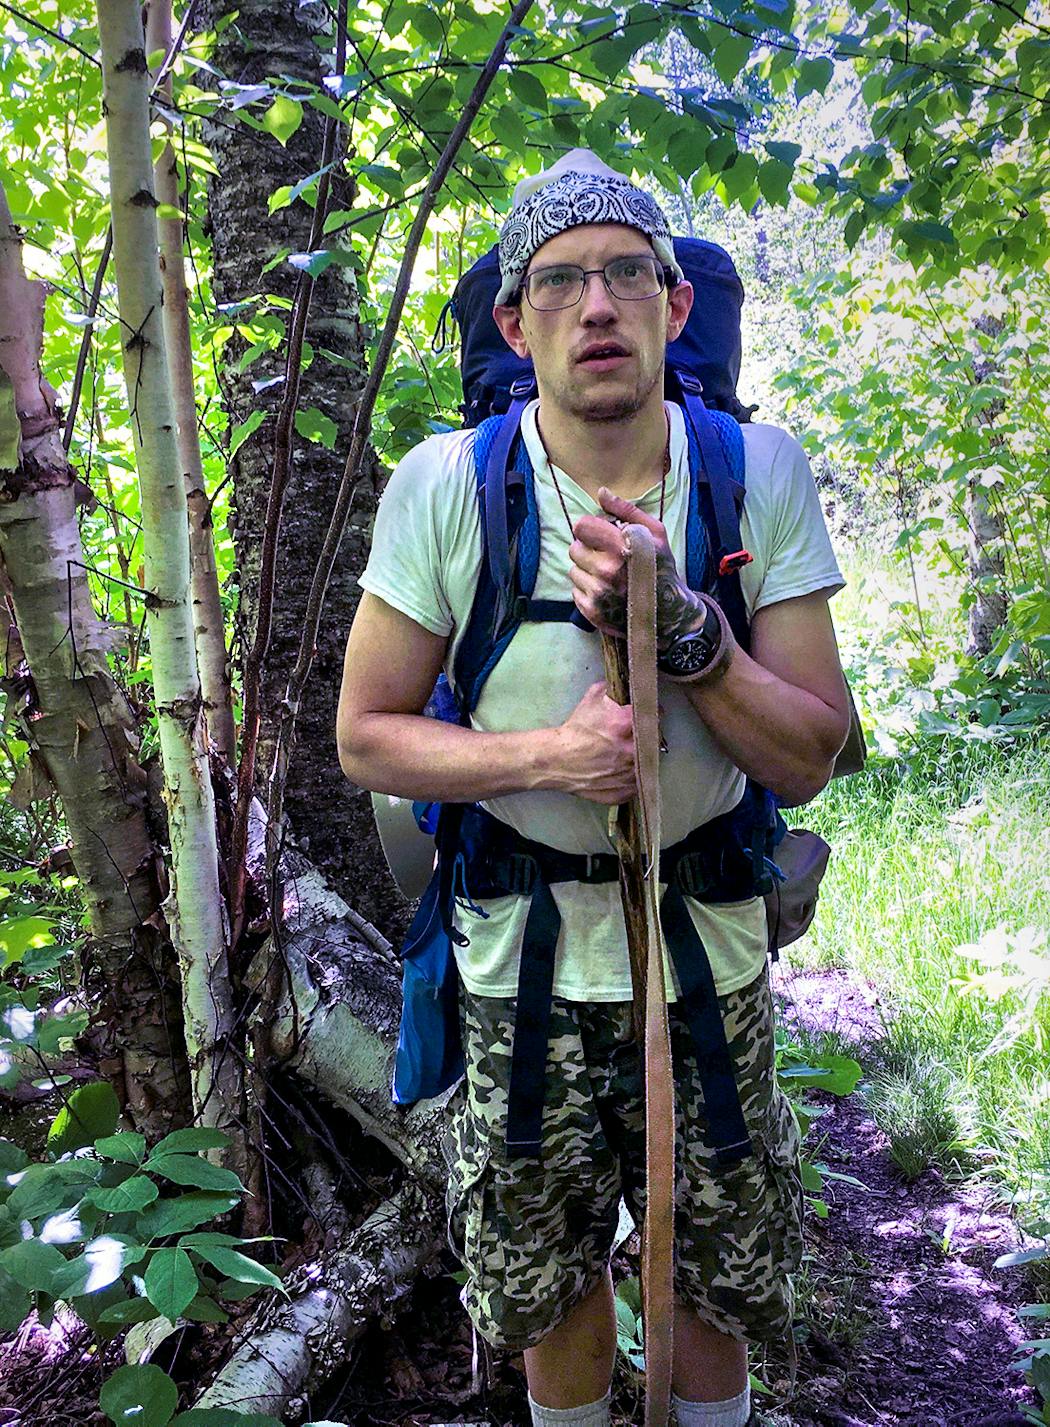 Derek Prescott of Andover, a recent University of Minnesota graduate, was new to the trail. 